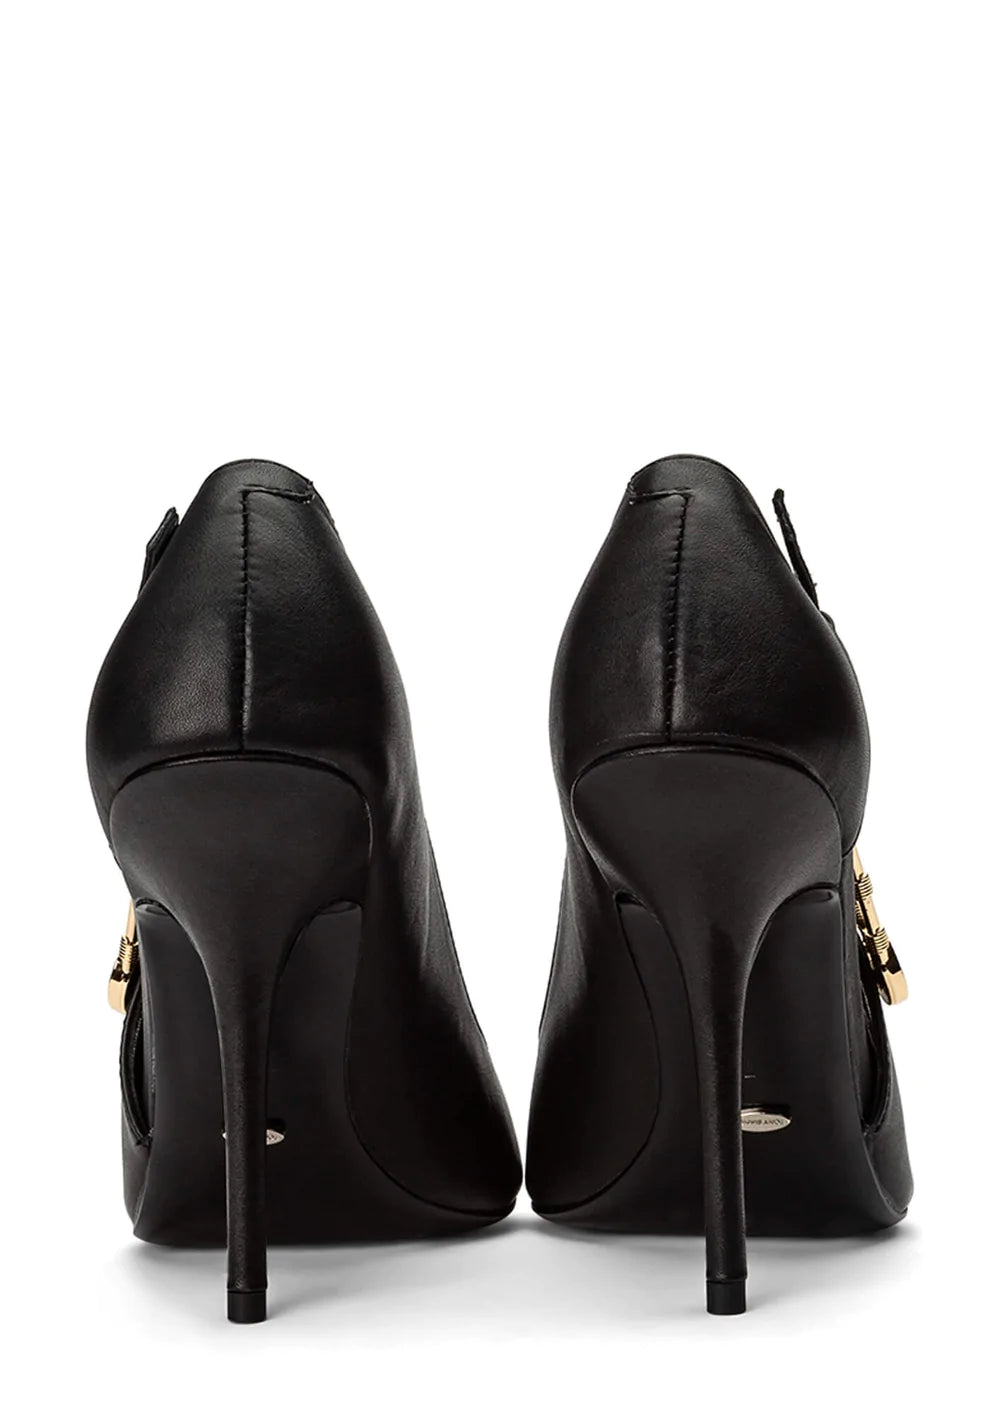 GLOW PUMP - TONY BIANCO - 10, 5, 6, 6.5, 7, 7.5, 8, 8.5, 9, BLACK, pump, SKIN, stiletto, stiletto heel, womens footwear - Stomp Shoes Darwin